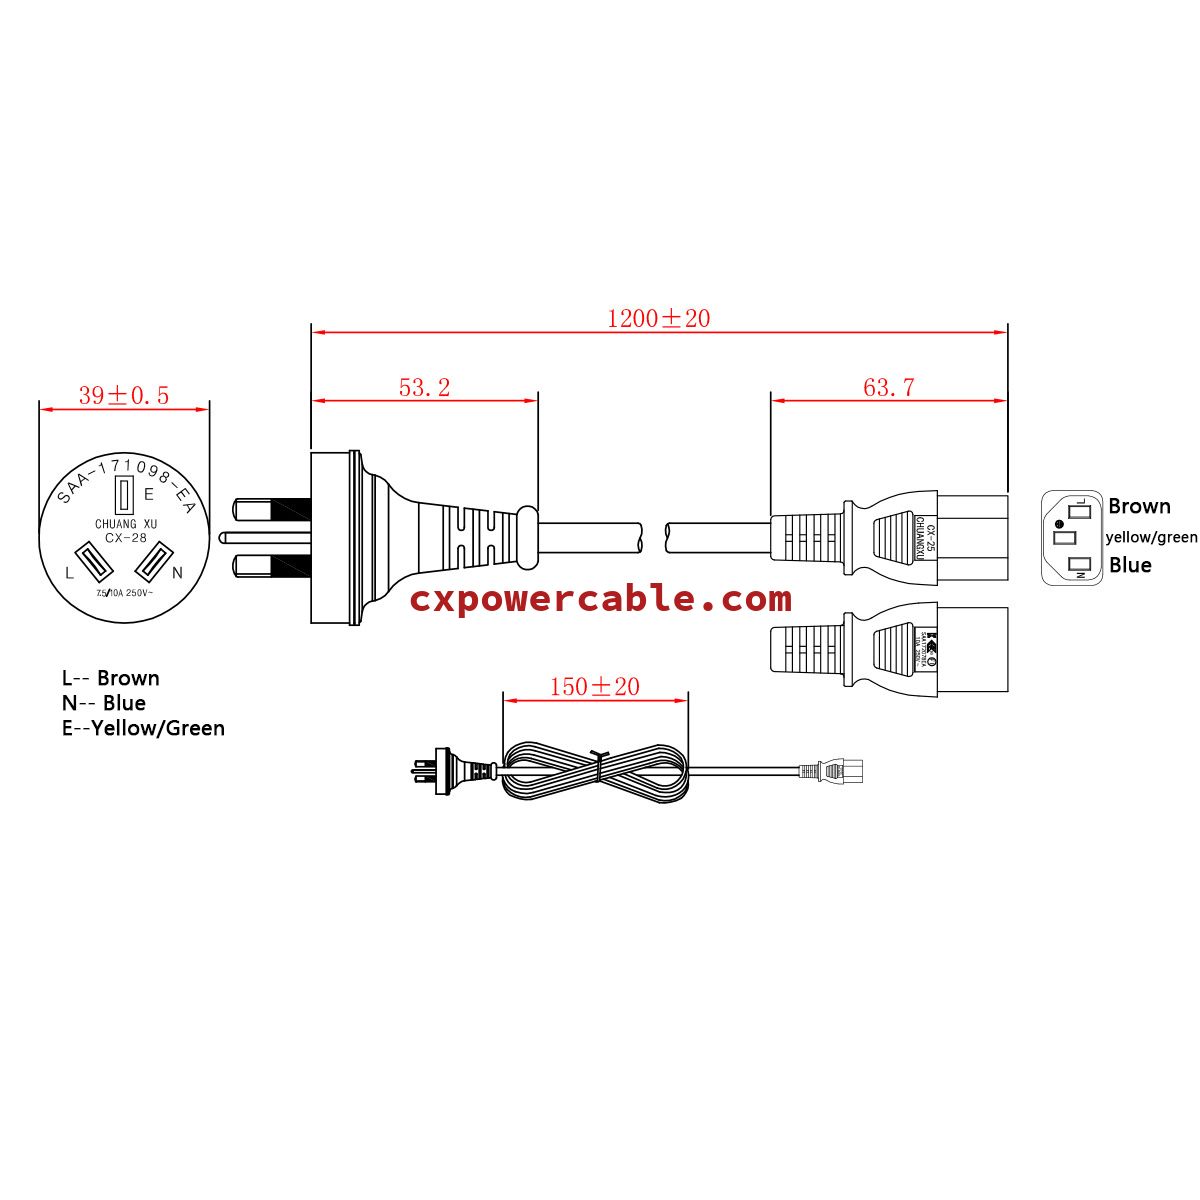 AUS style 3pin plug SAA certified + 3pin tail plug power cable